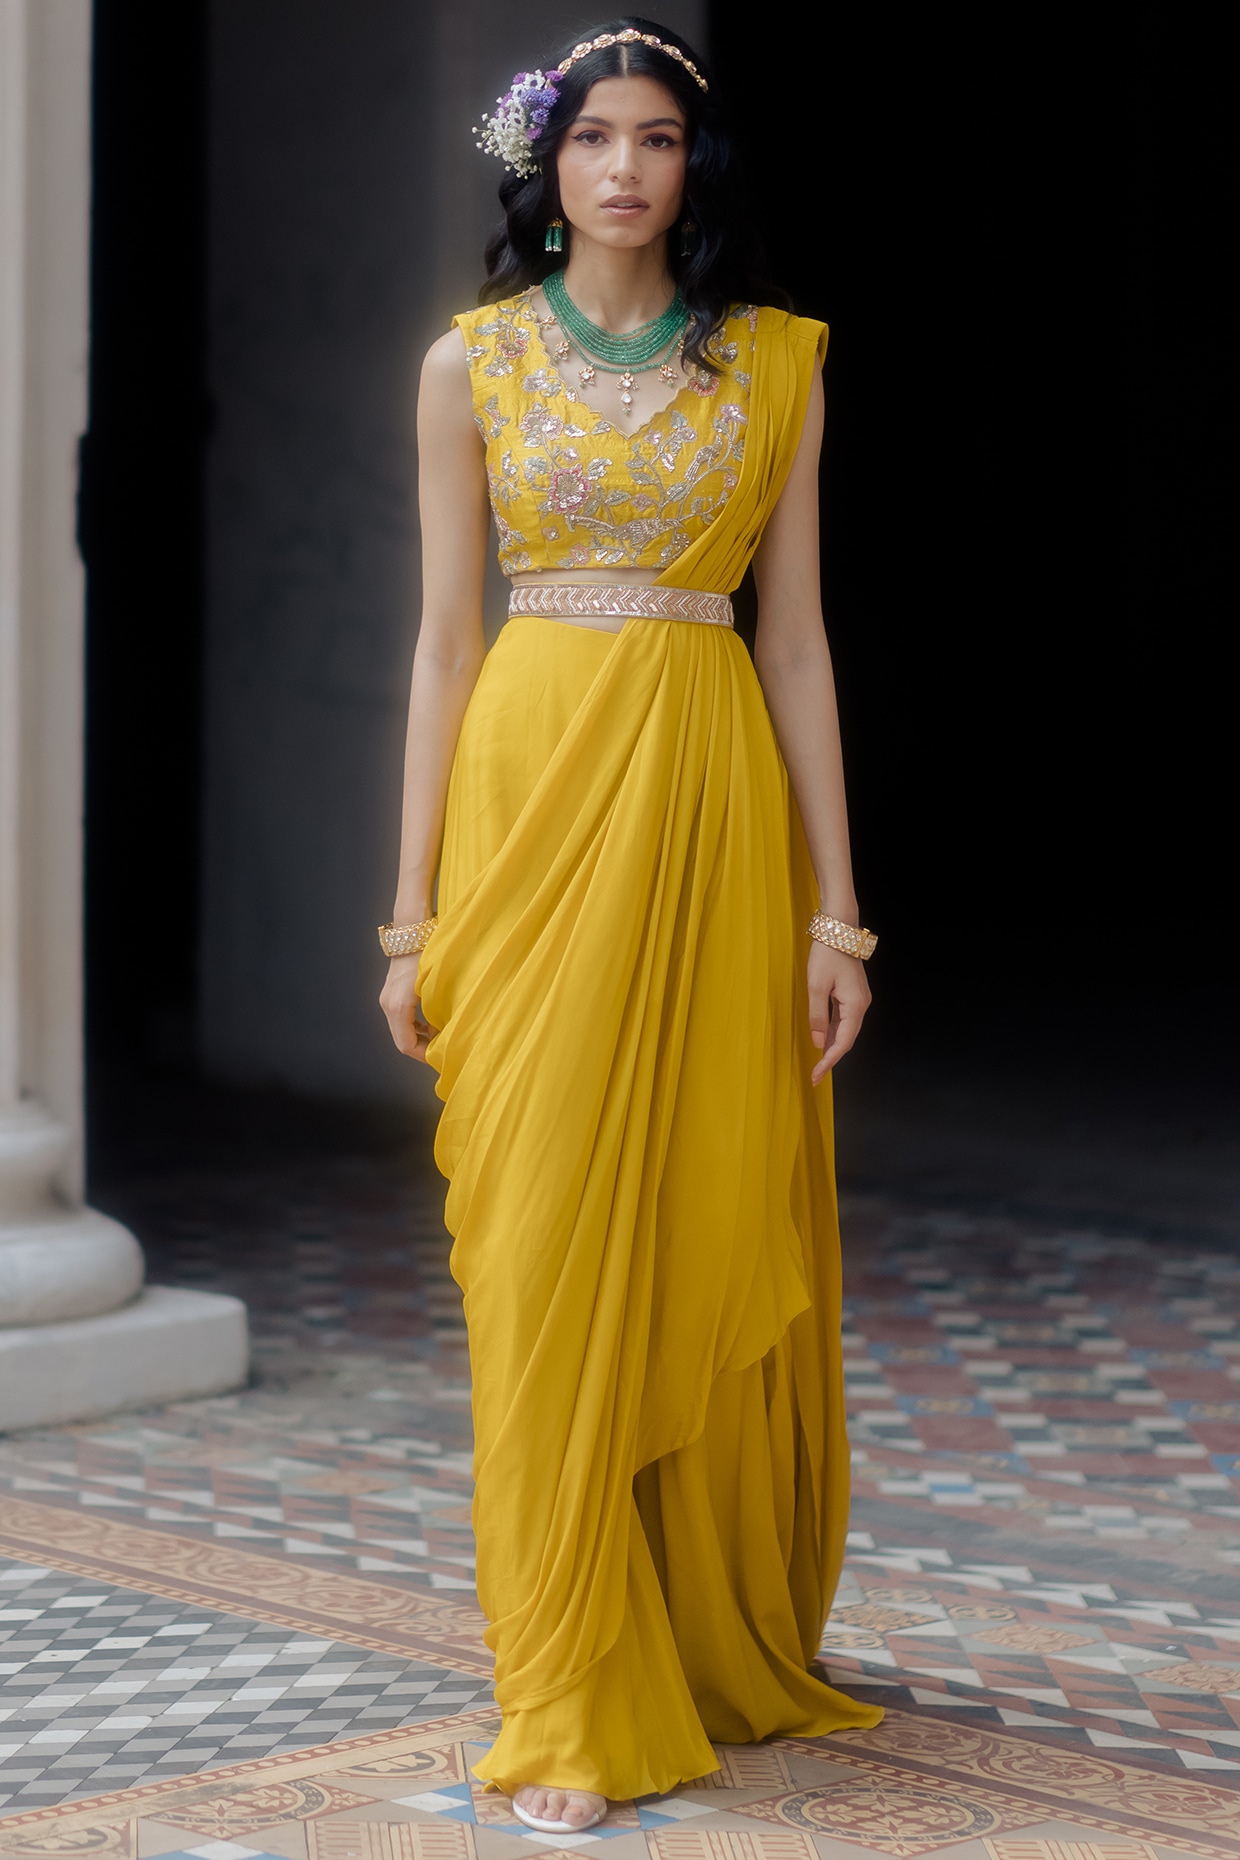 Haldi Wedding Dress - Buy Haldi Wedding Dress online in India